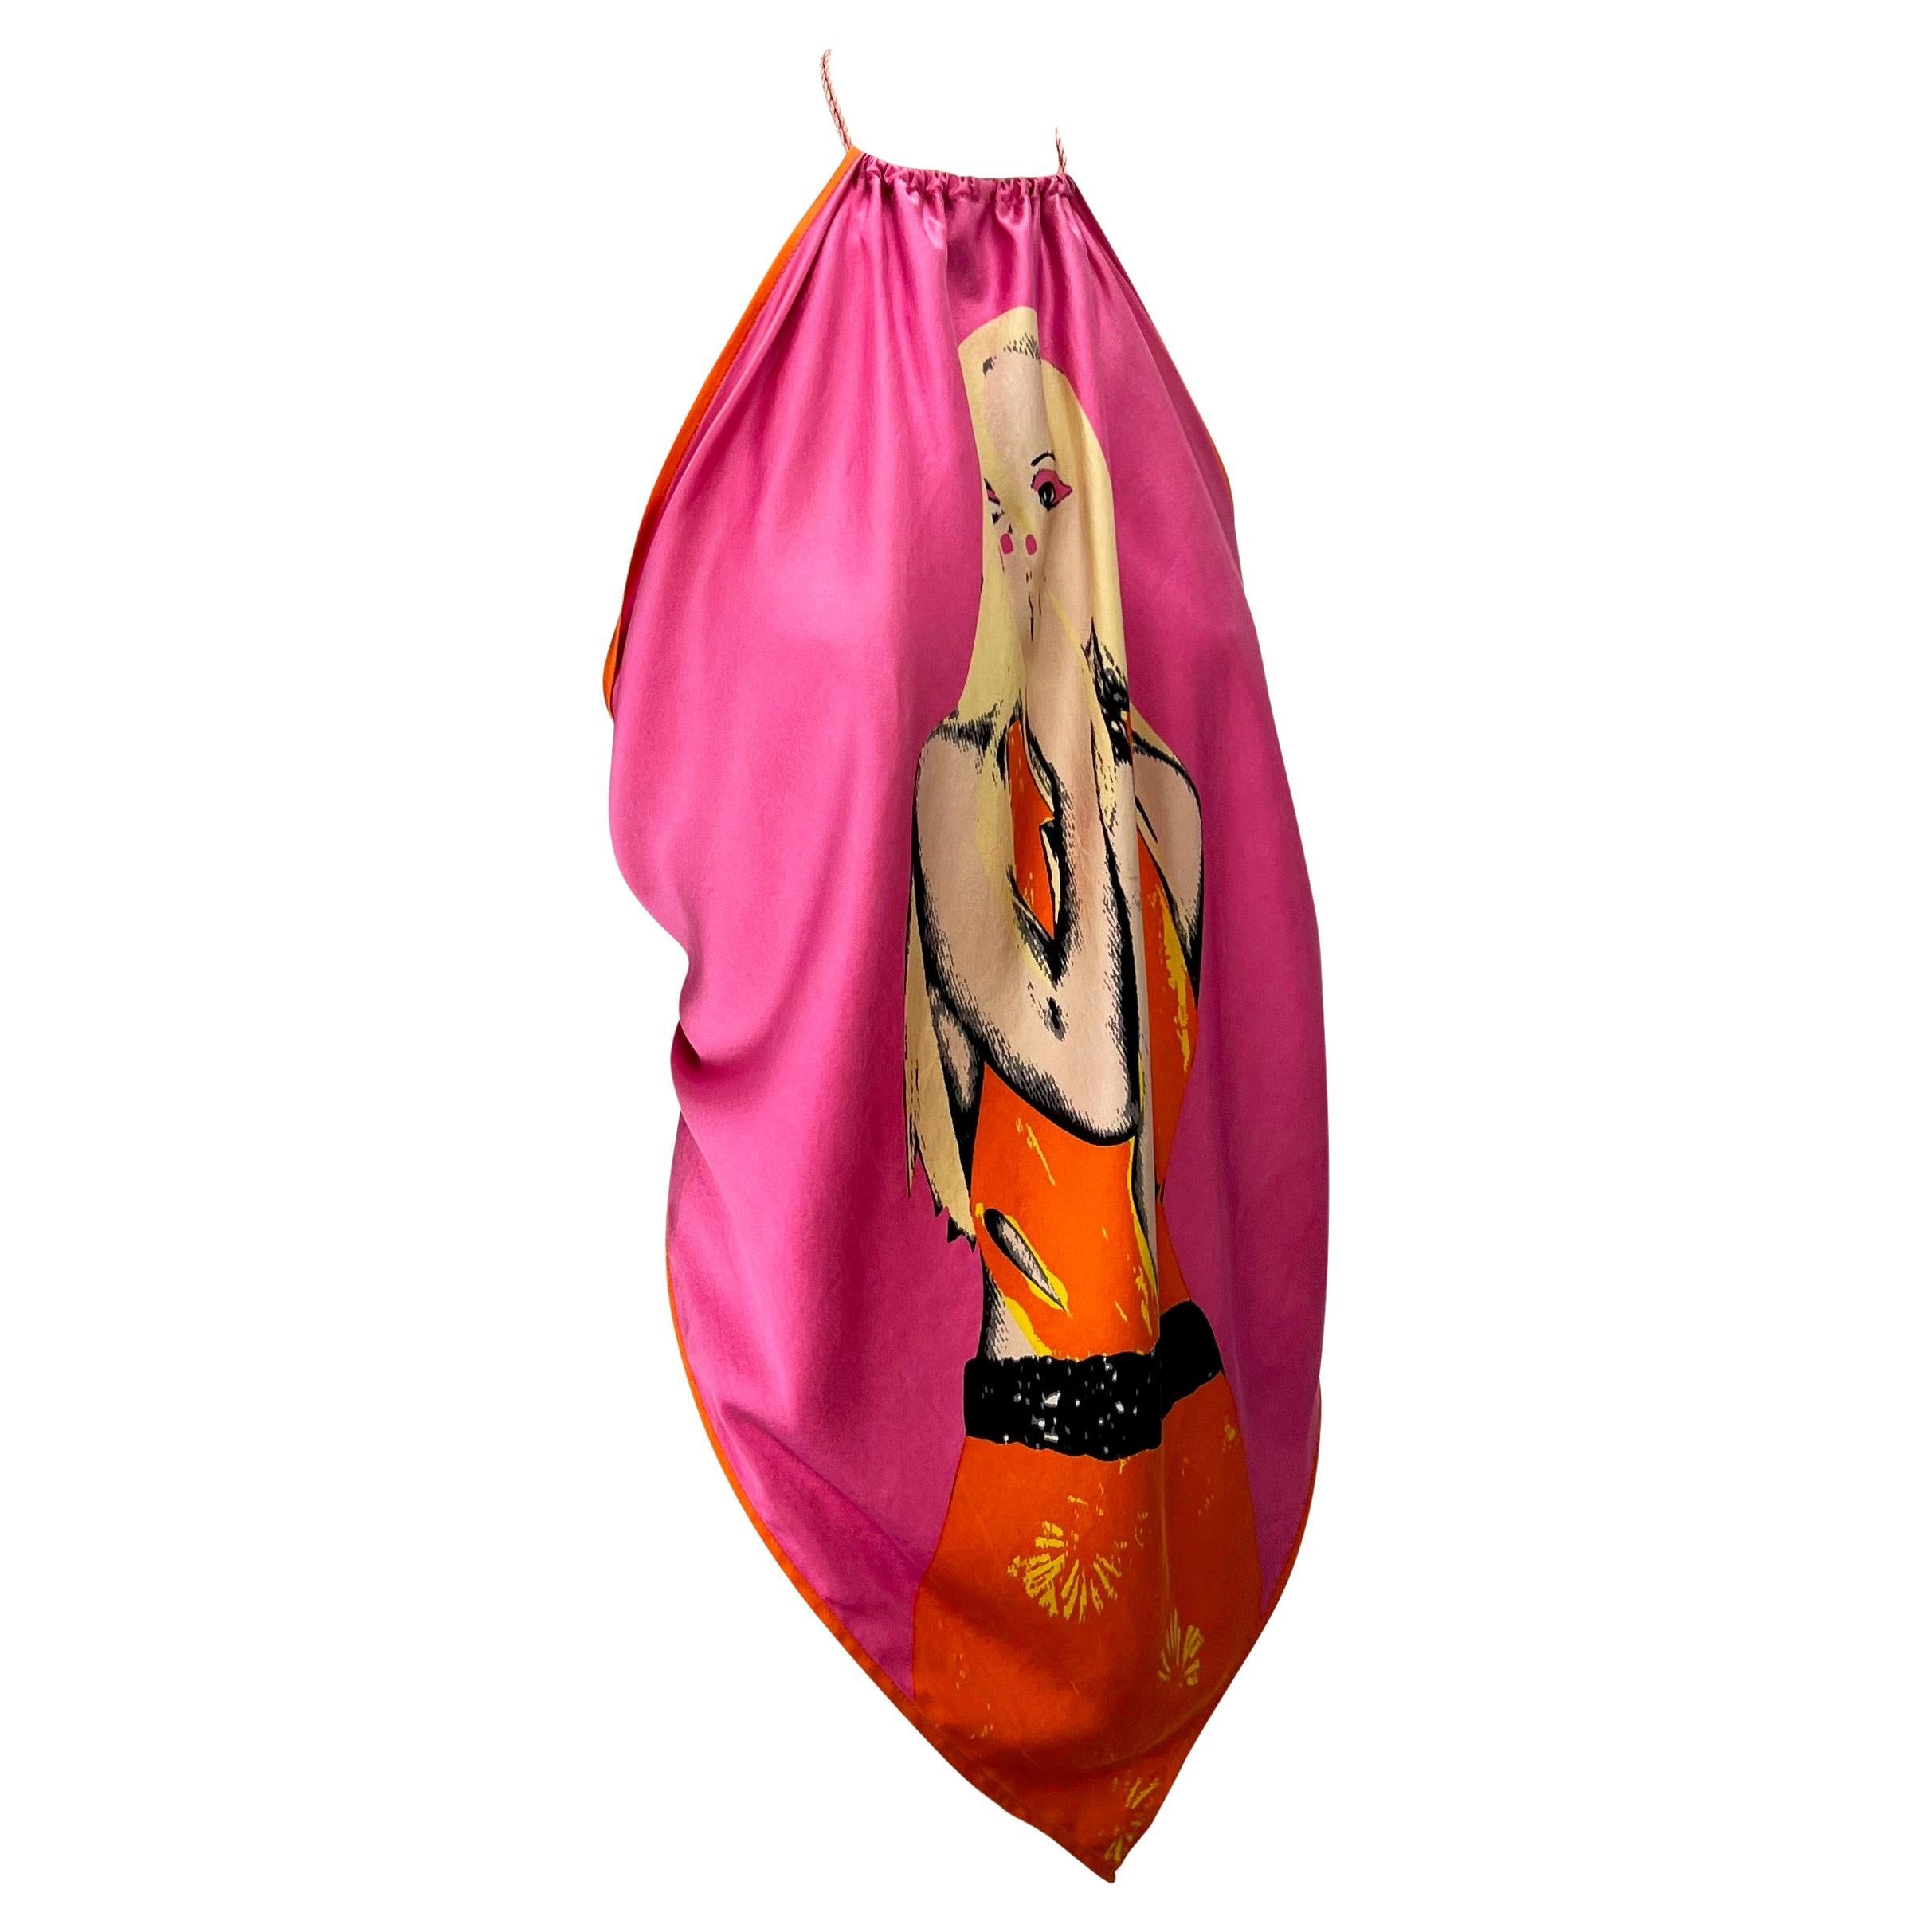 S/S 2004 Versace by Donatella Pink Pop Art Silk Scarf Tassel Blouse For Sale 3